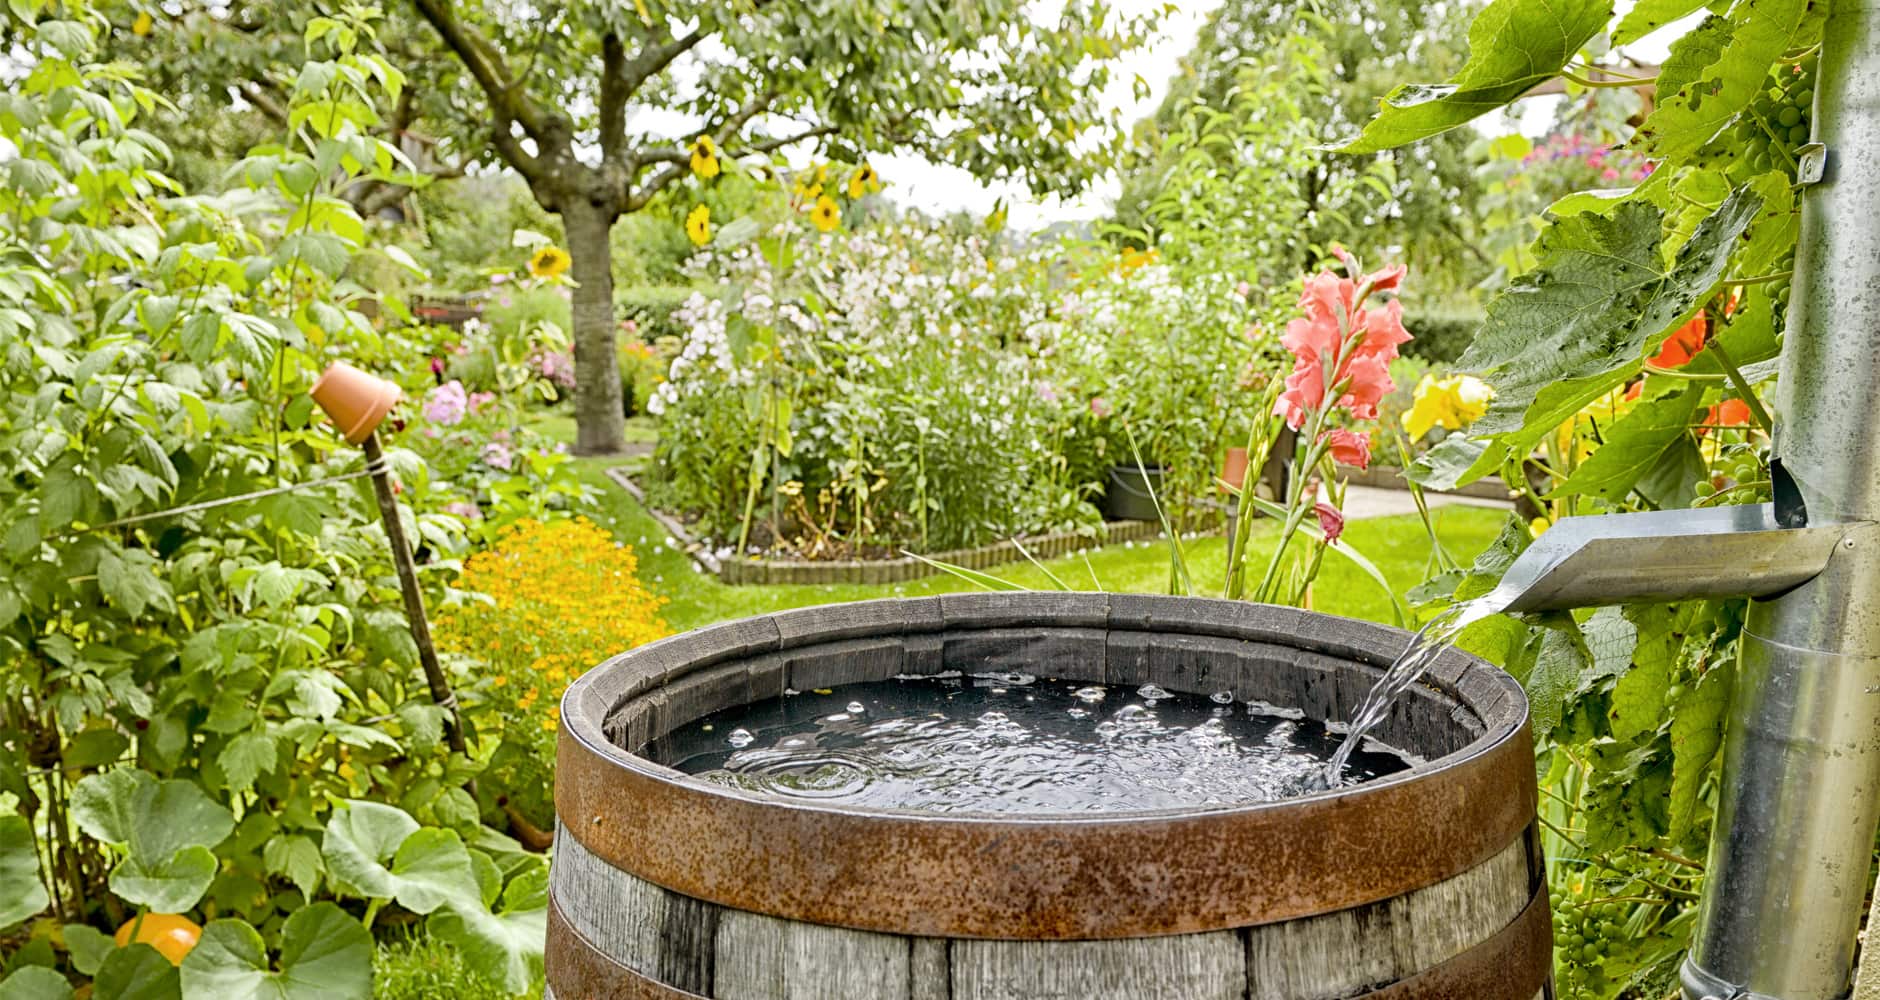 rainwater-barrel-gardening-a108549998-1715839107.jpg